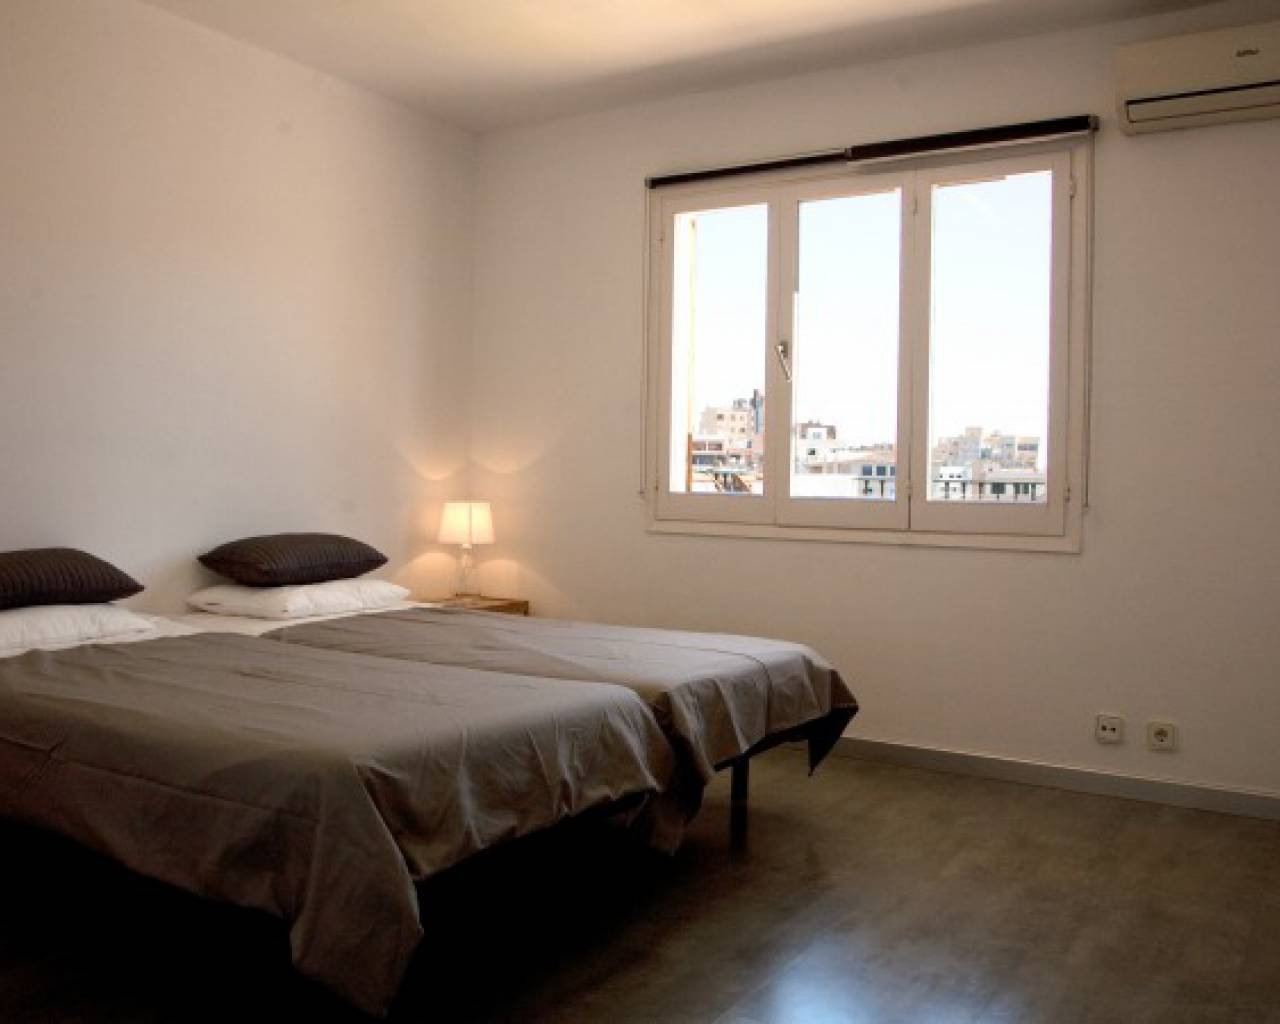 3 bedroom penthouse apartment in rent in Palma de Mallorca